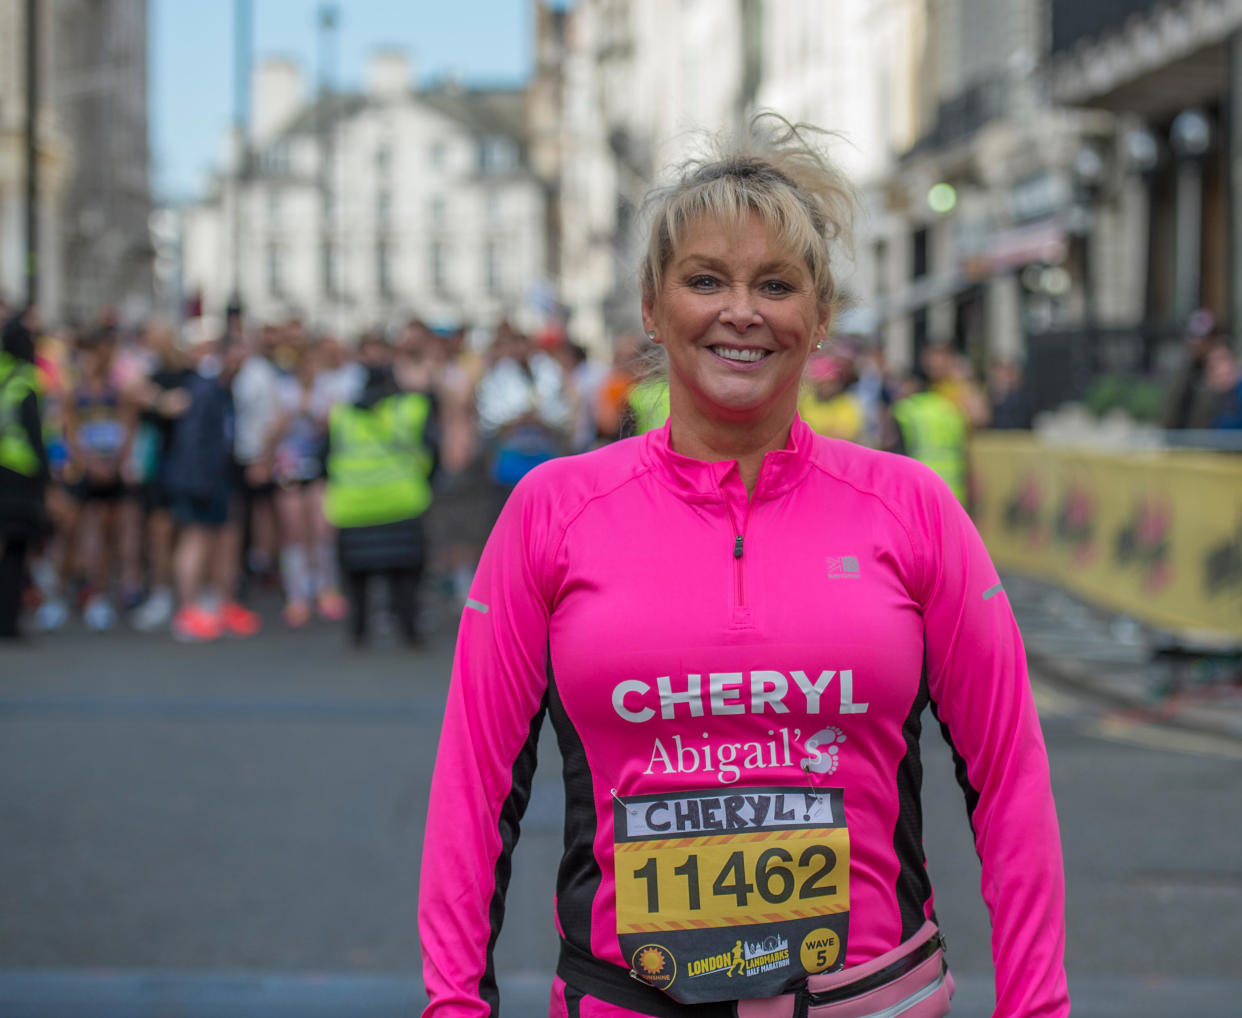 Cheryl Baker at the start line photocall of the London Landmarks Half Marathon 2019. Credit: Malcolm Park/Alamy Live News.